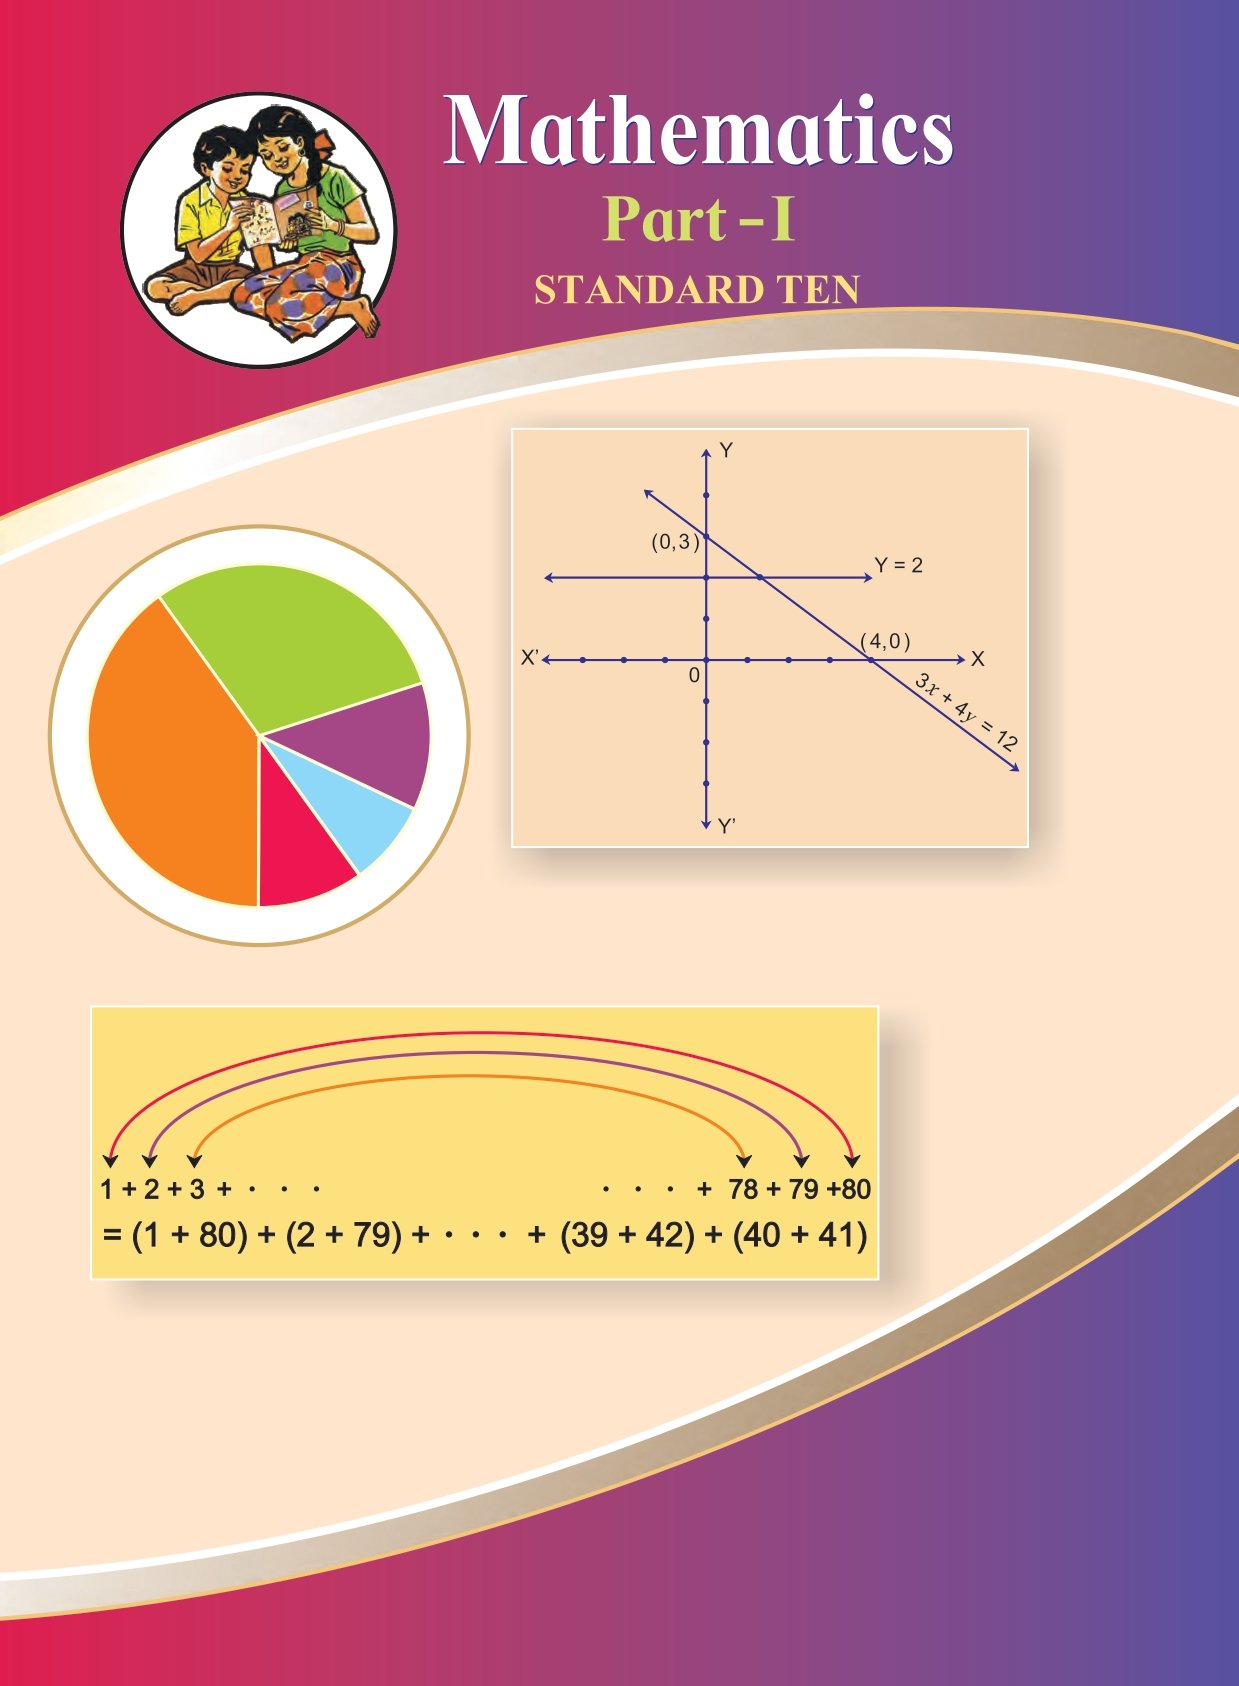 Maharashtra Board 10th Std Maths Textbook (Part 1) - Page 1